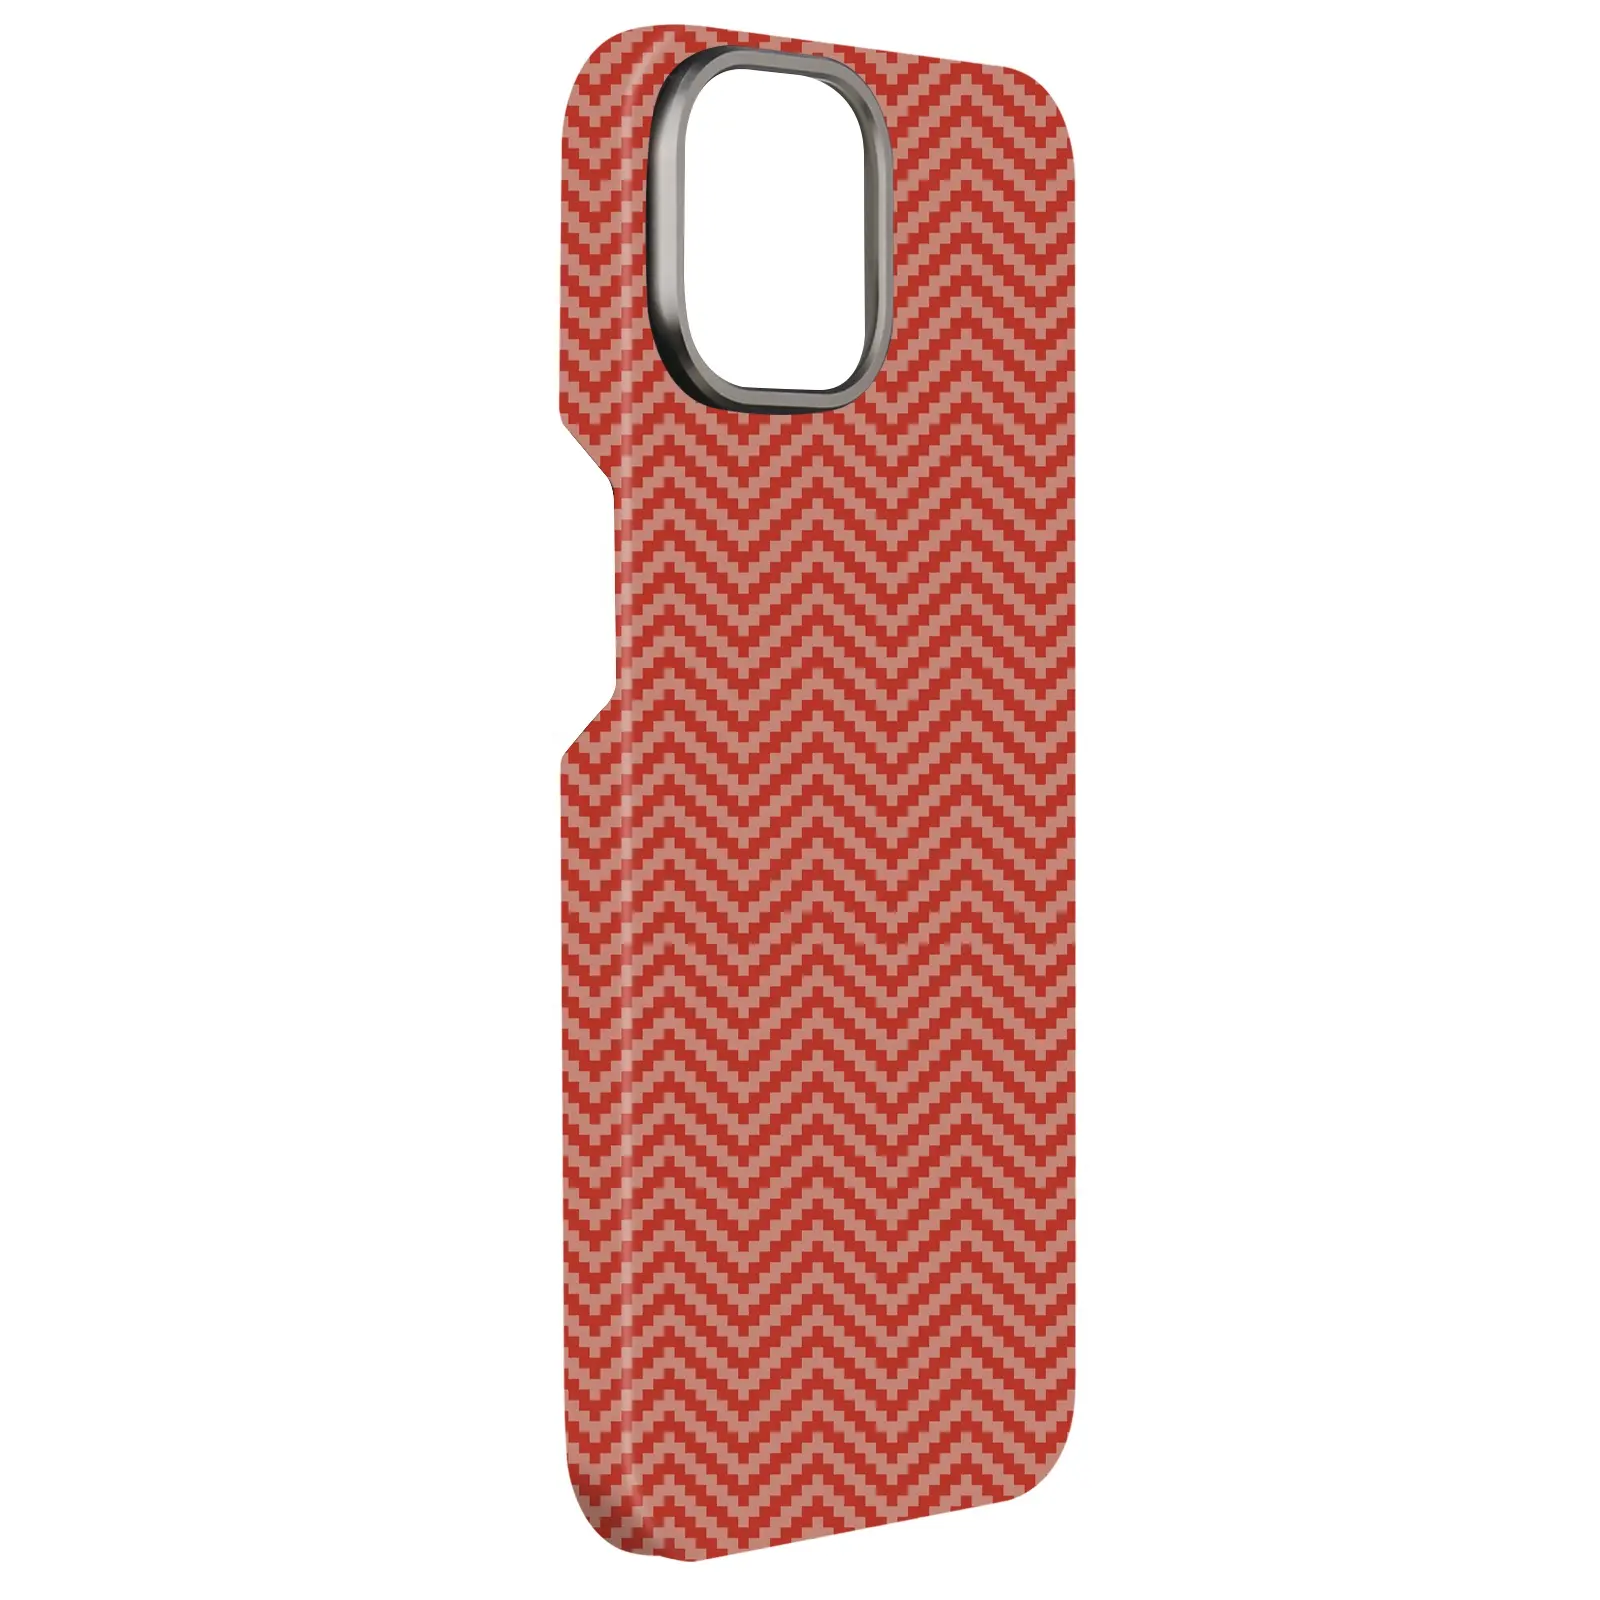 Casing ponsel matte hitam merah asli, casing telepon seluler serat aramid untuk iPhone 13 14 15 pro